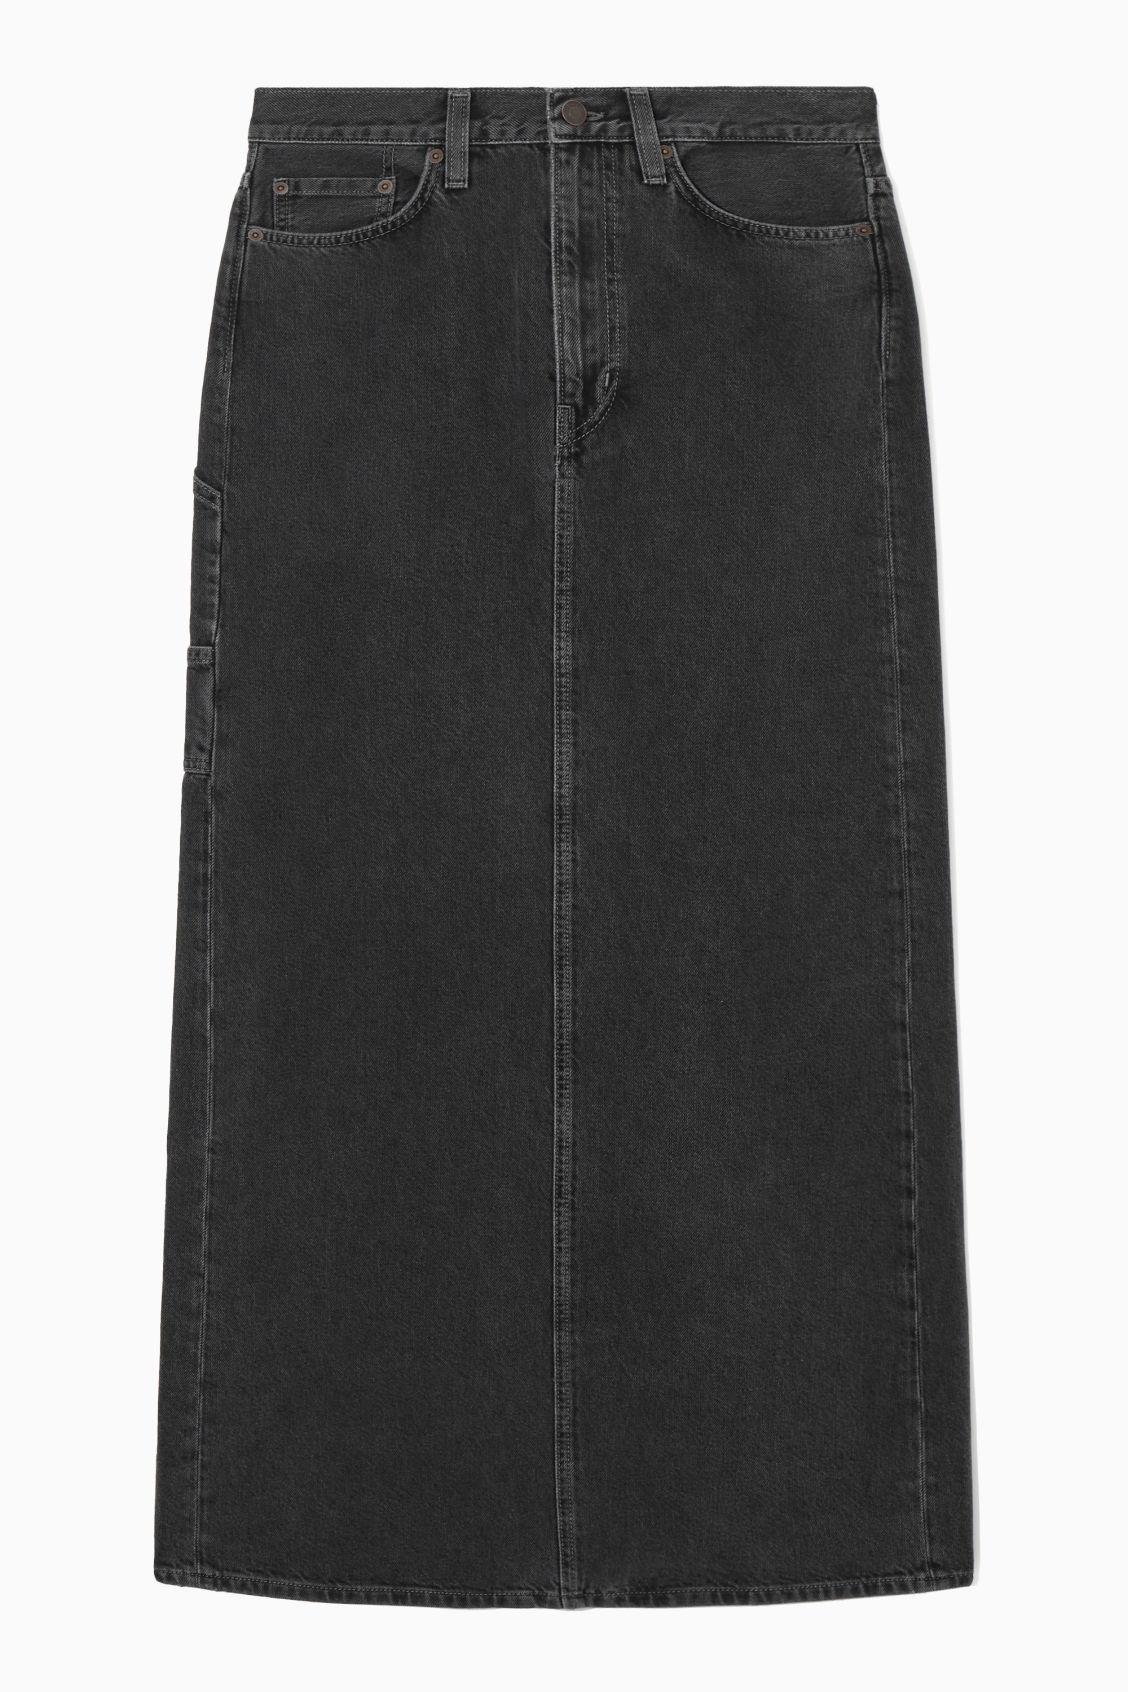 COS Denim Maxi Skirt in Black | Lyst